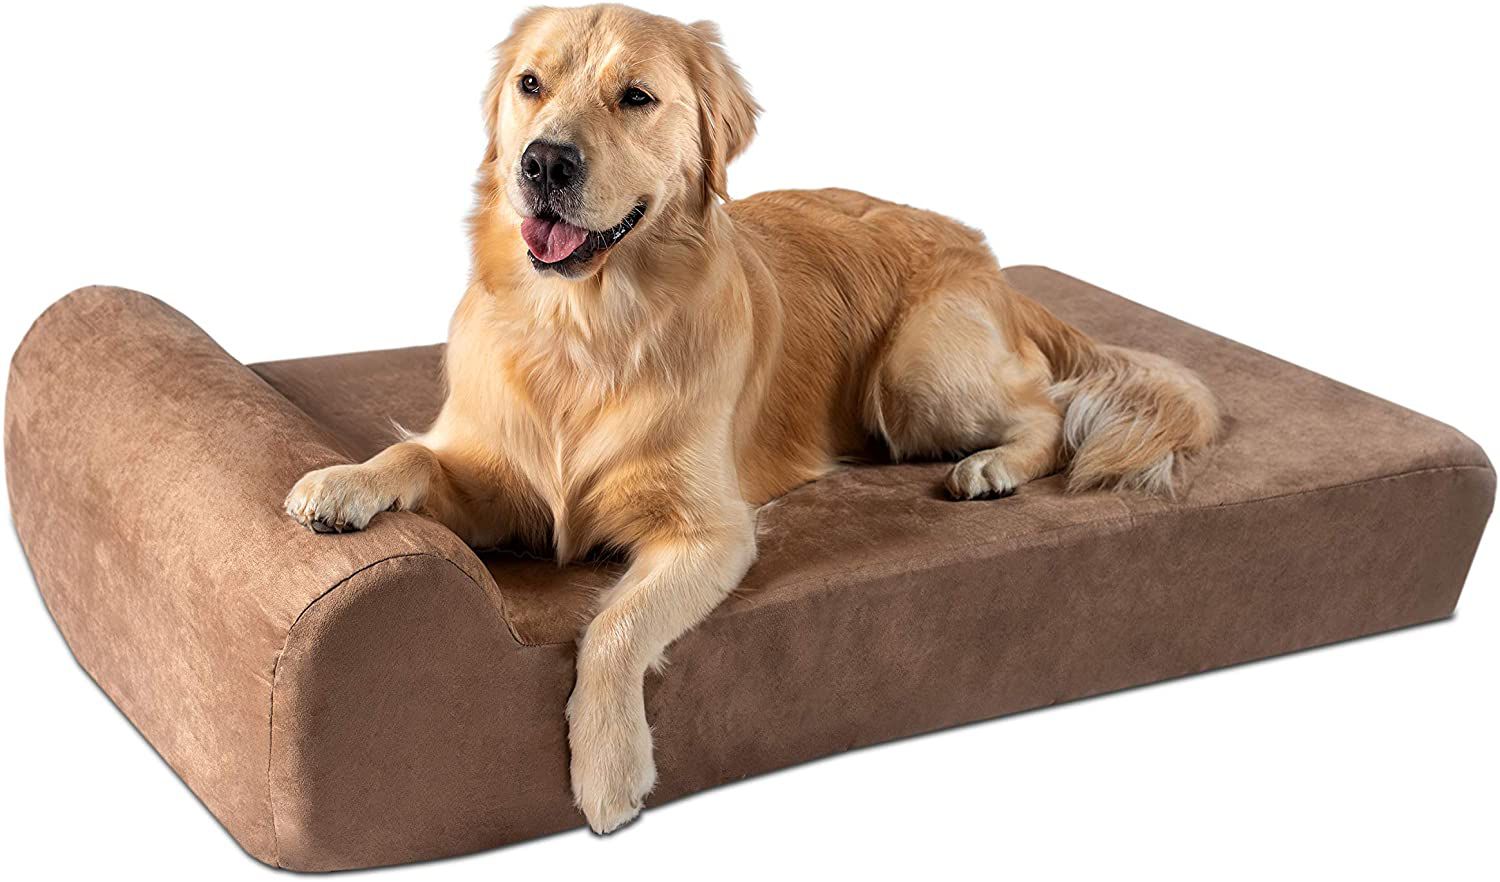 How big a dog bed do I need?